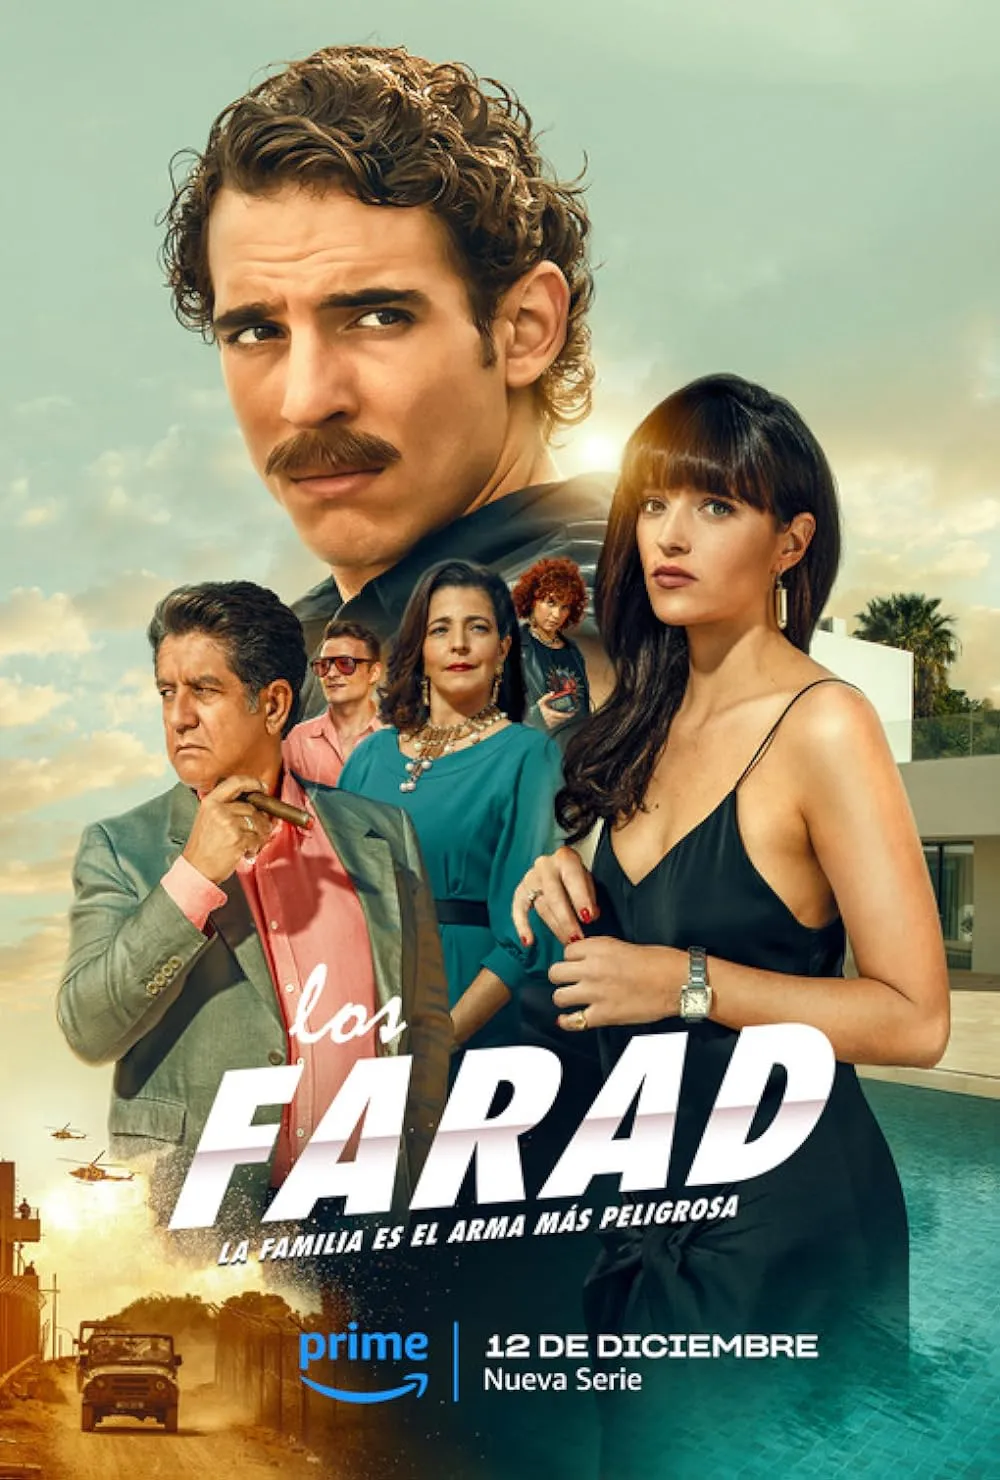 Los Farad 2023 S01 Complete Hindi ORG Dual Audio 480p AMZN HDRip ESub 1GB Download